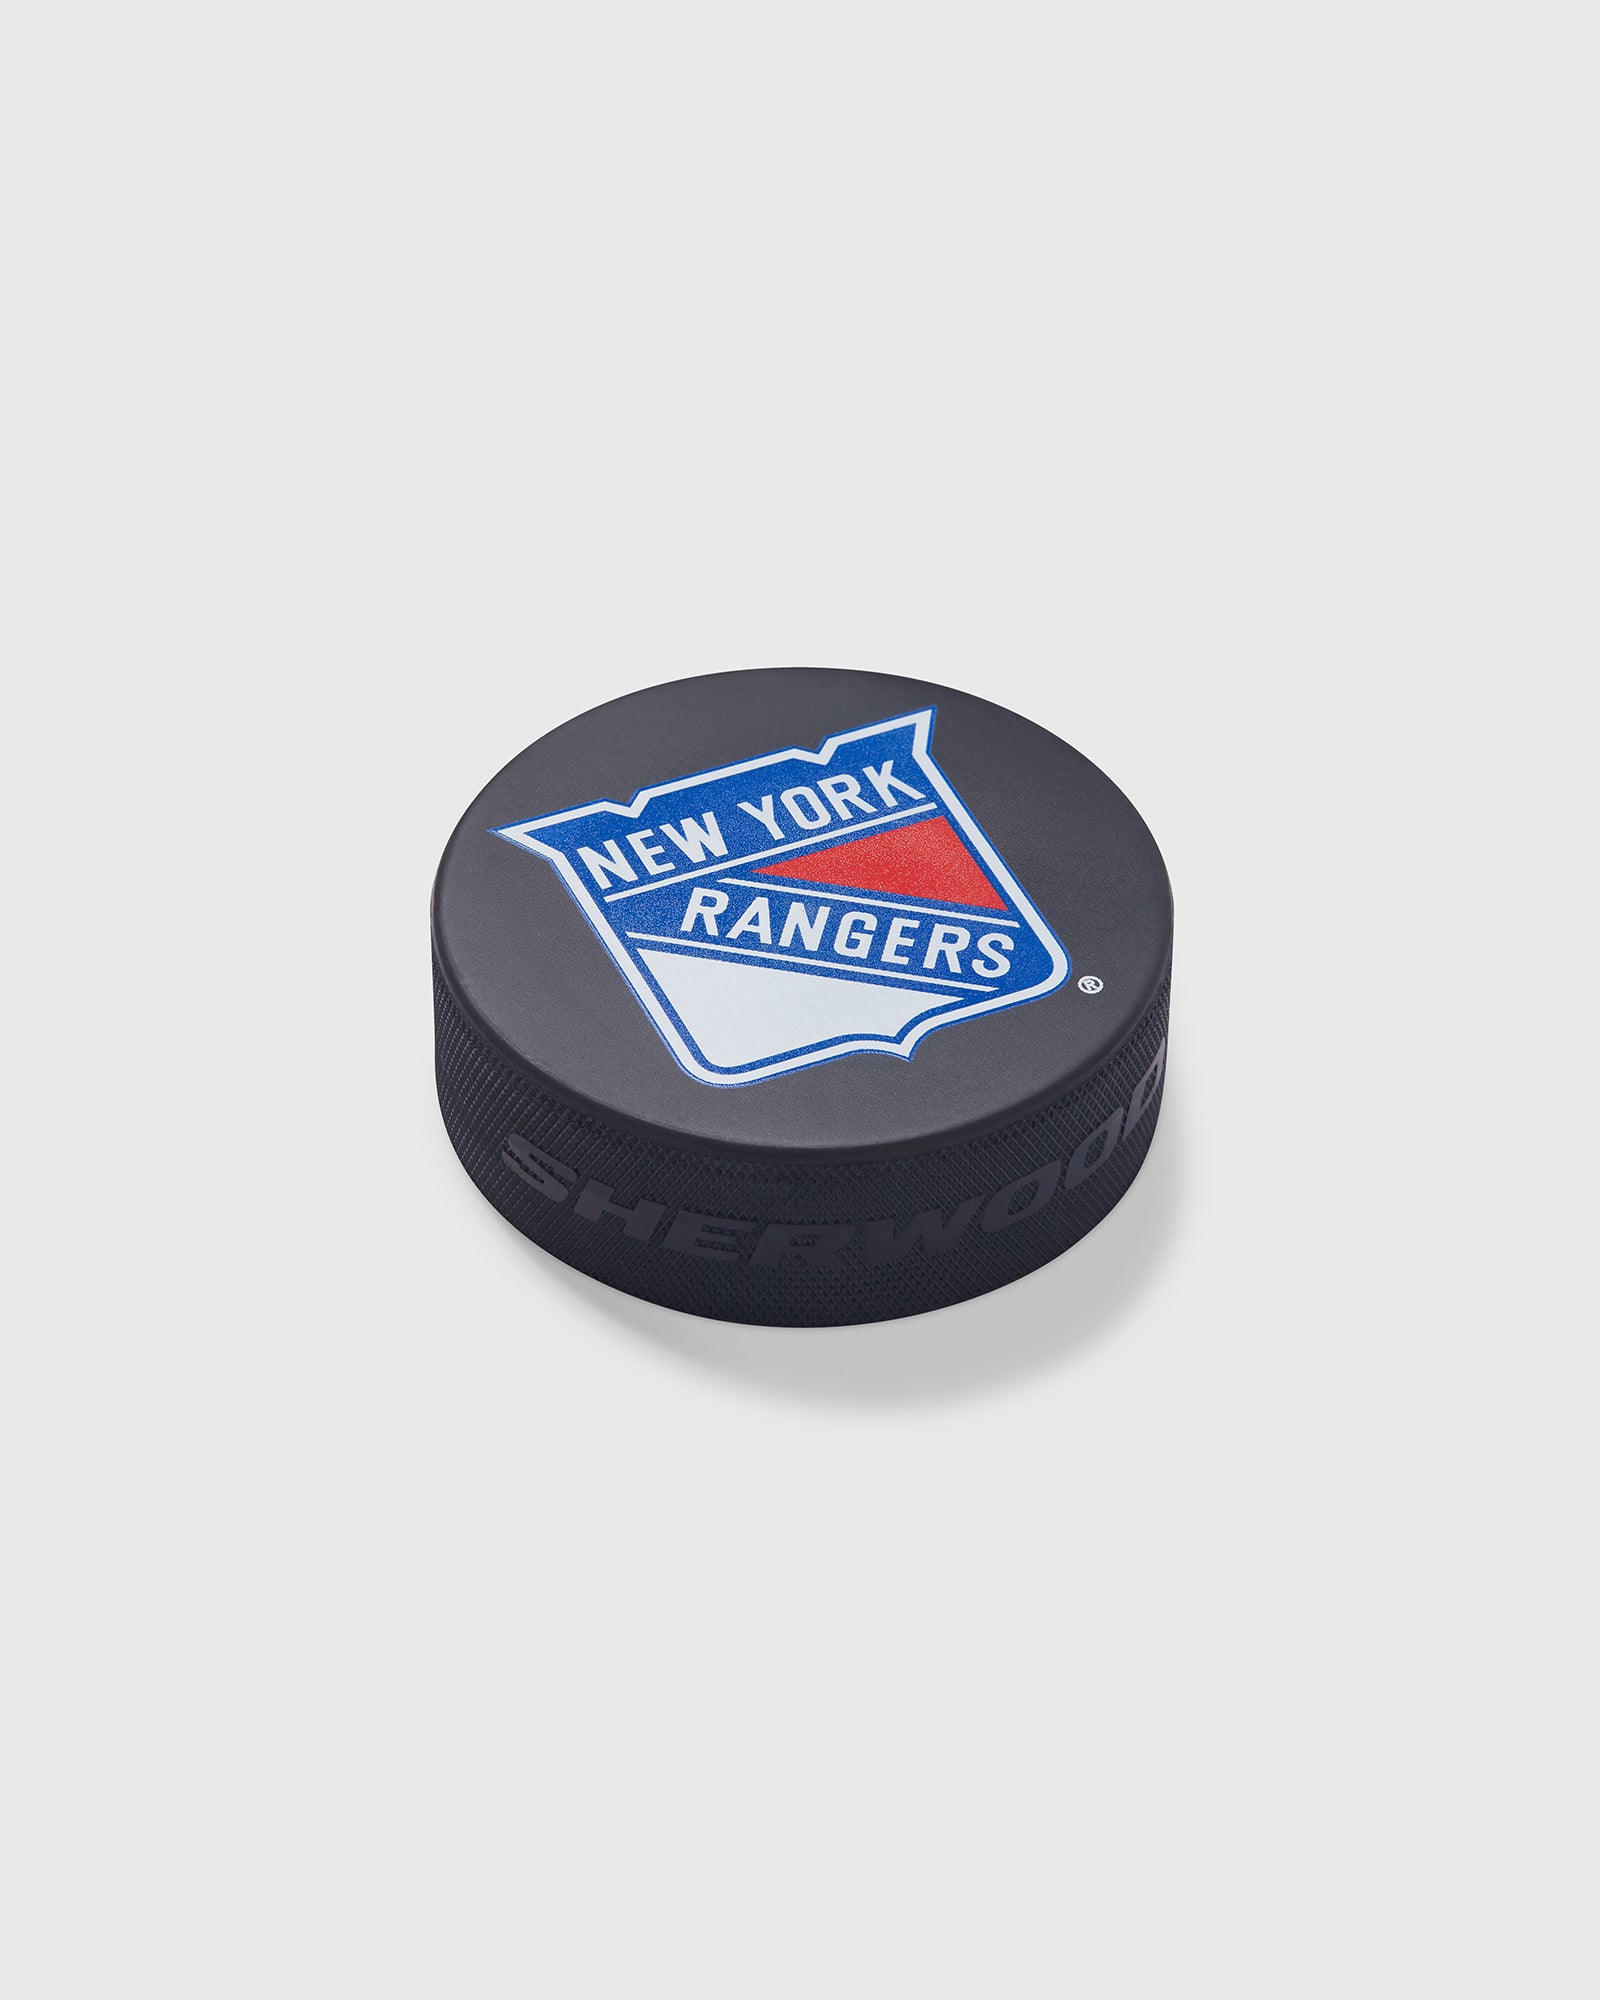 New York Rangers Hockey Puck - Black